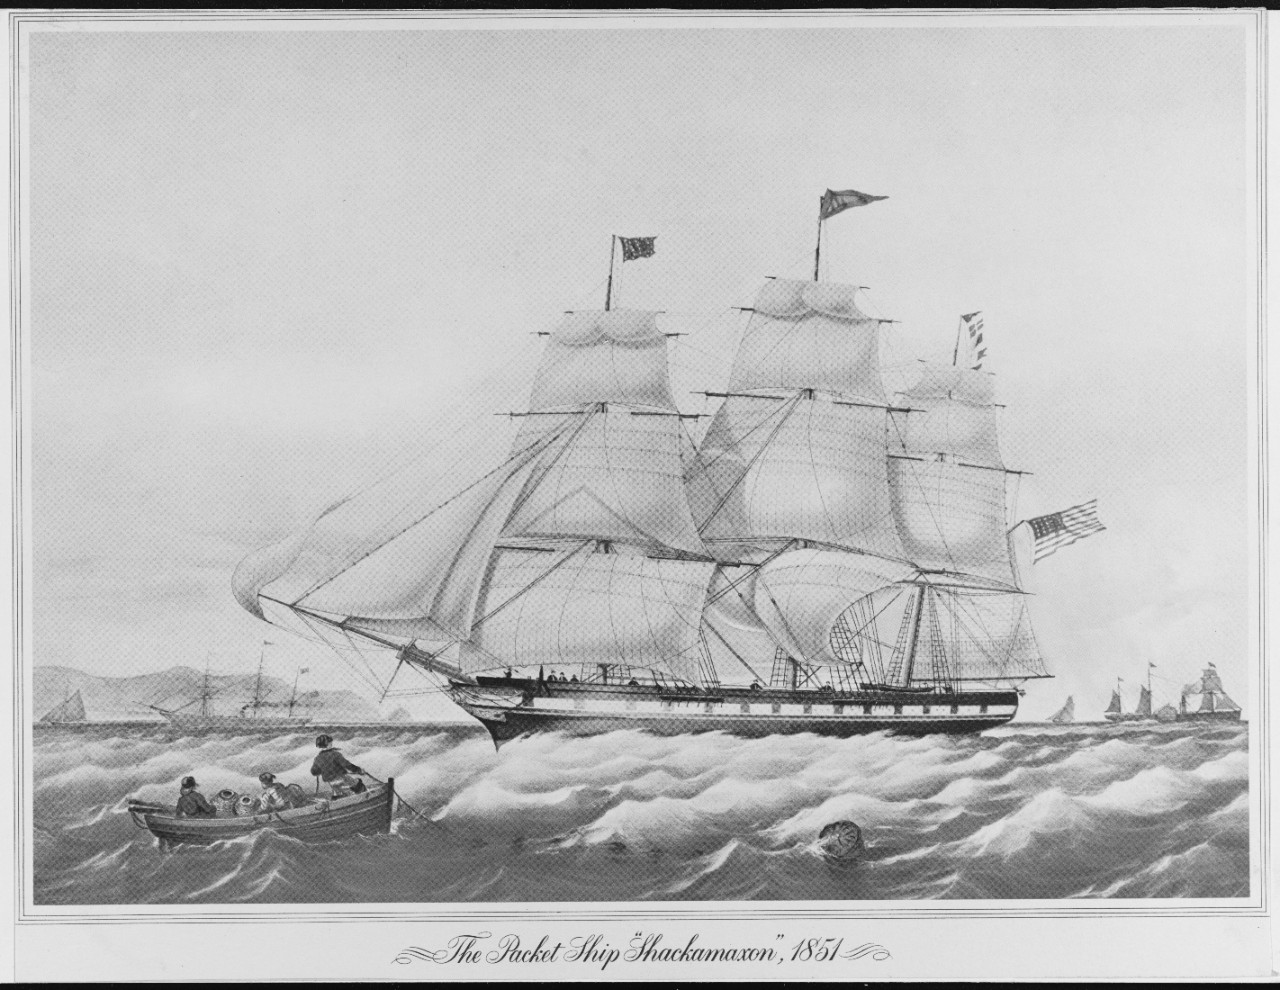 The packet ship "SHACKAMAXON", 1851.